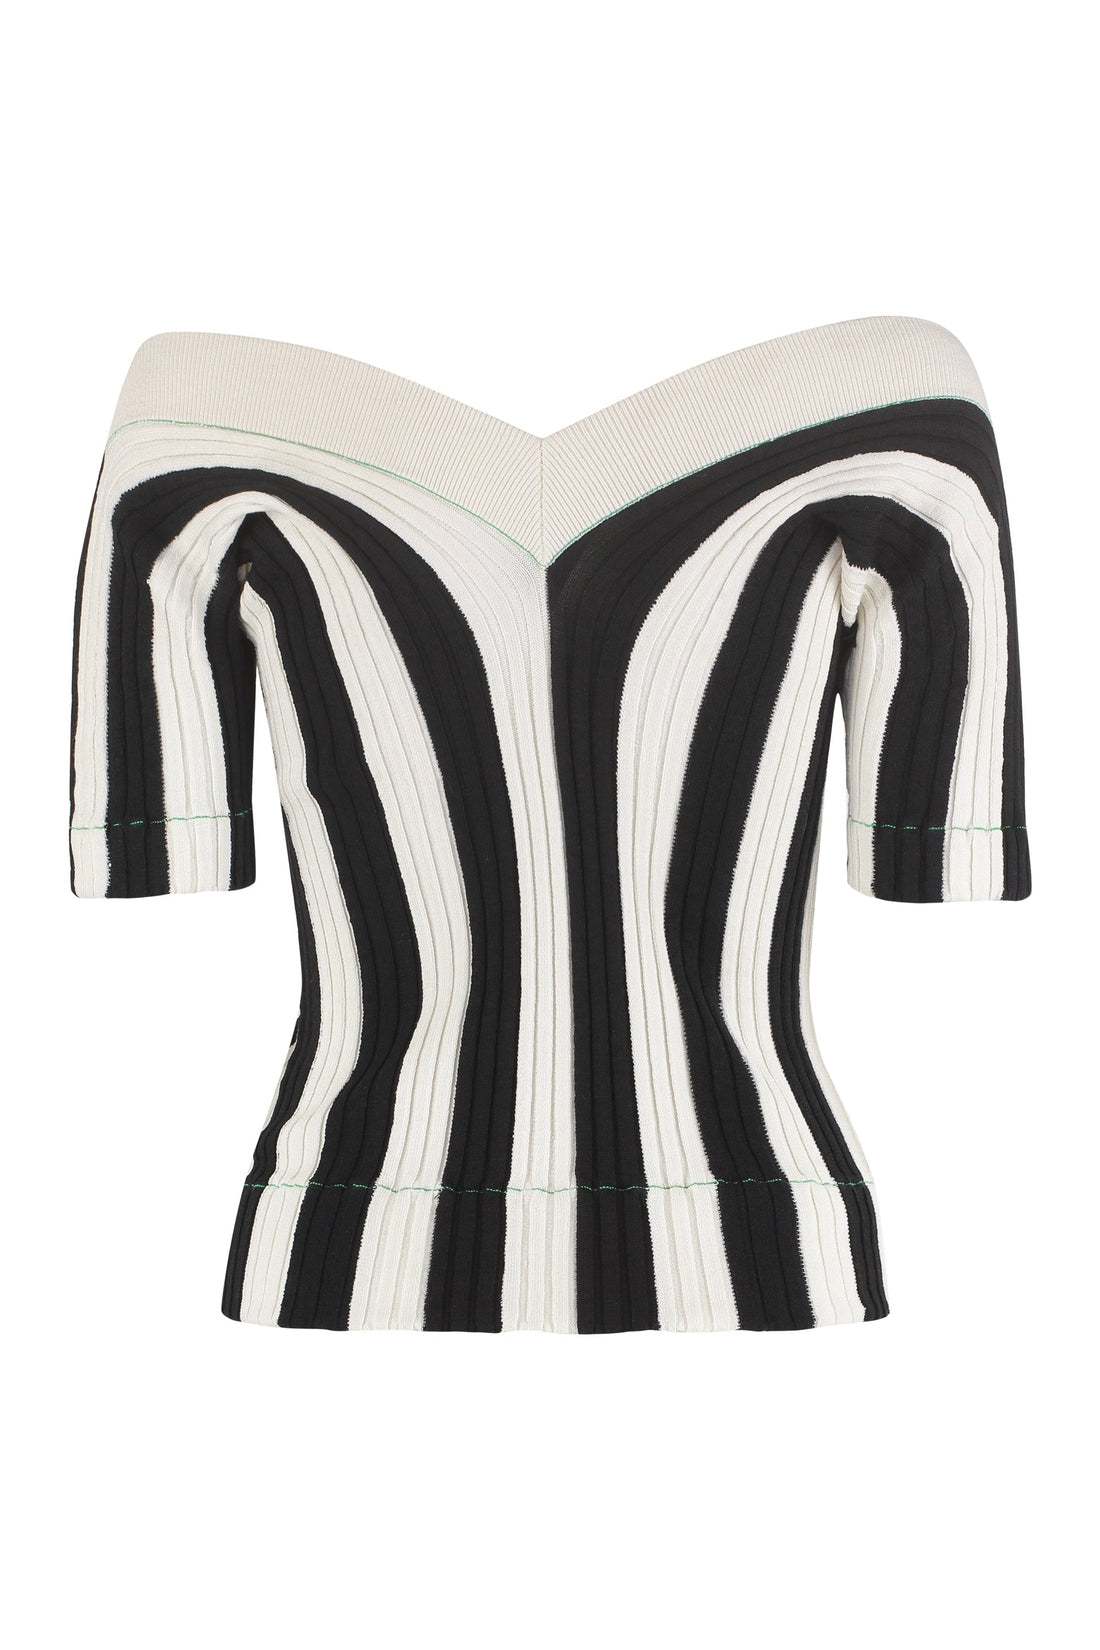 Bottega Veneta-OUTLET-SALE-Striped knit top-ARCHIVIST